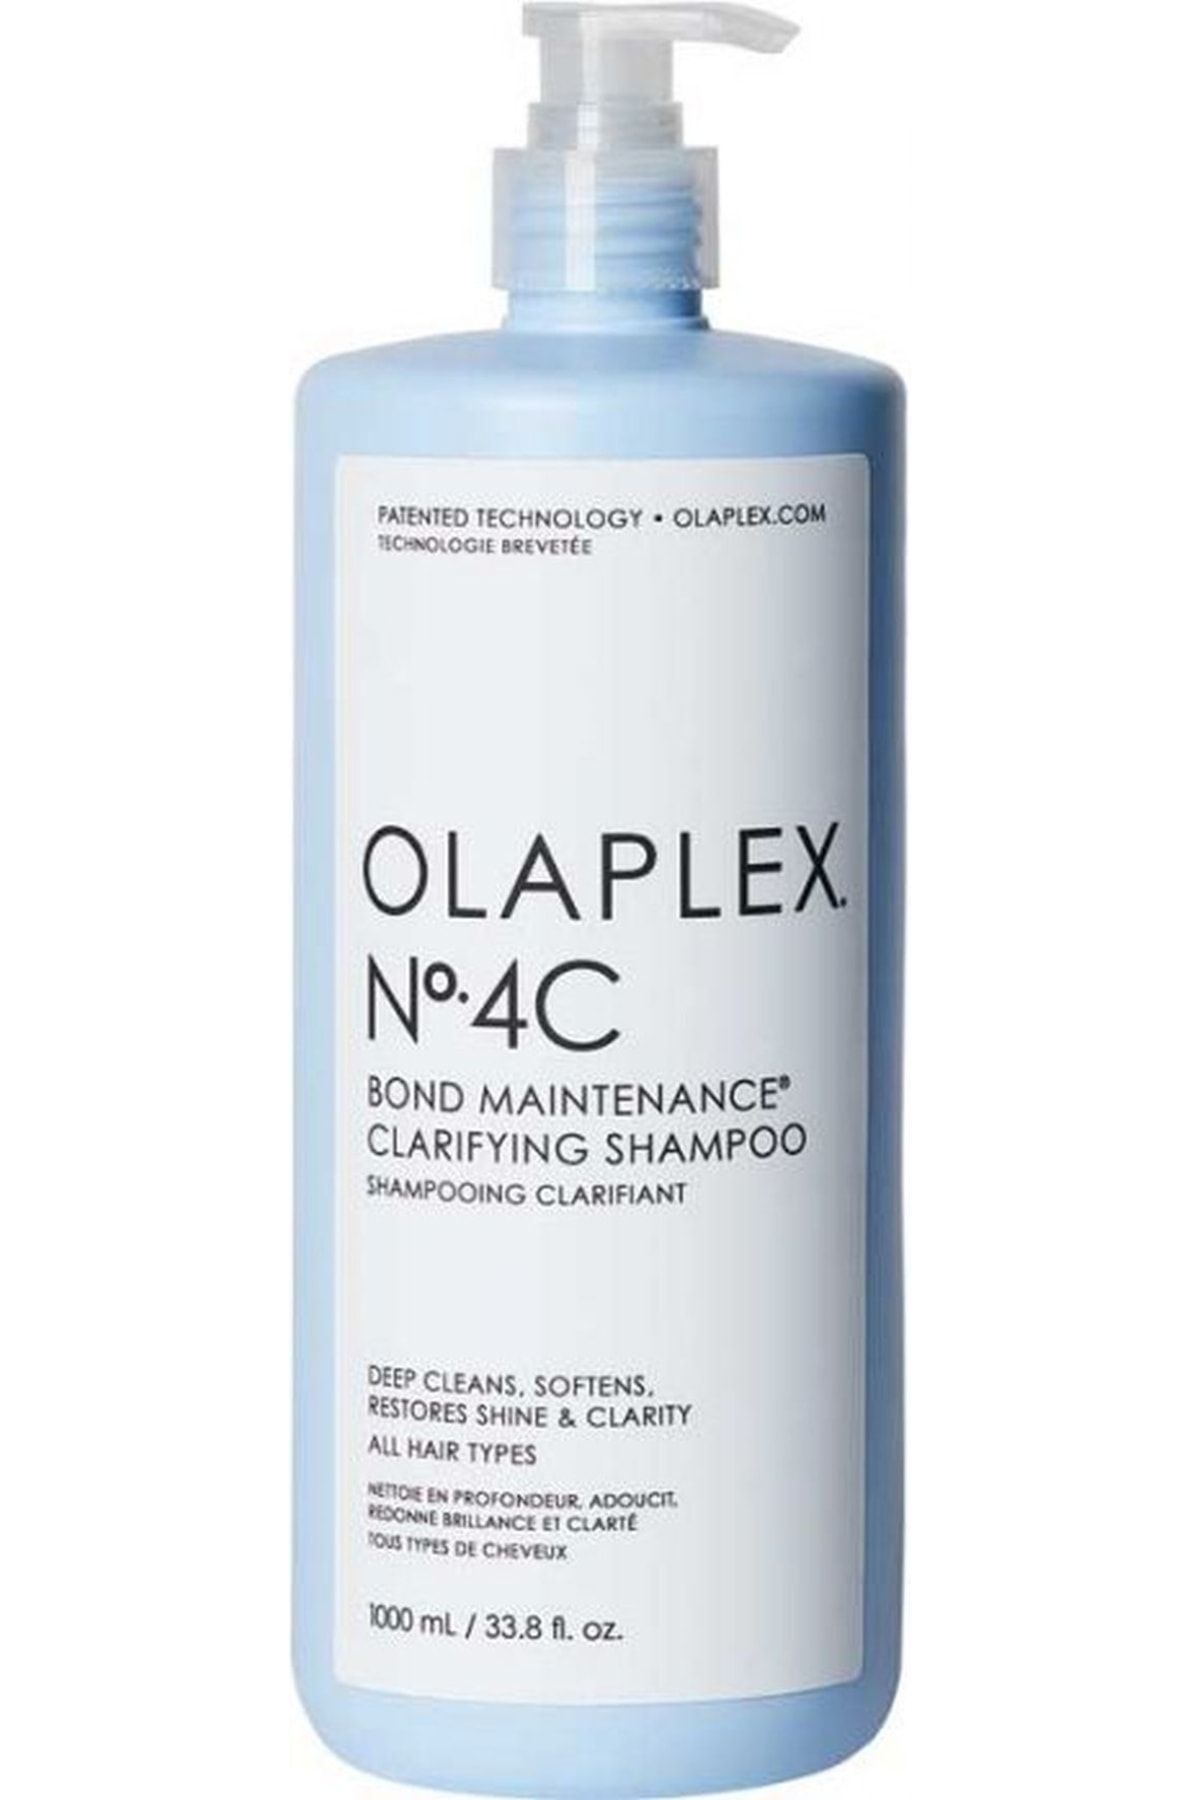 Olaplex No.4c Bond Maintenance® Clarifying Shampoo Arındırıcı Şampuan 1000ml 20142710